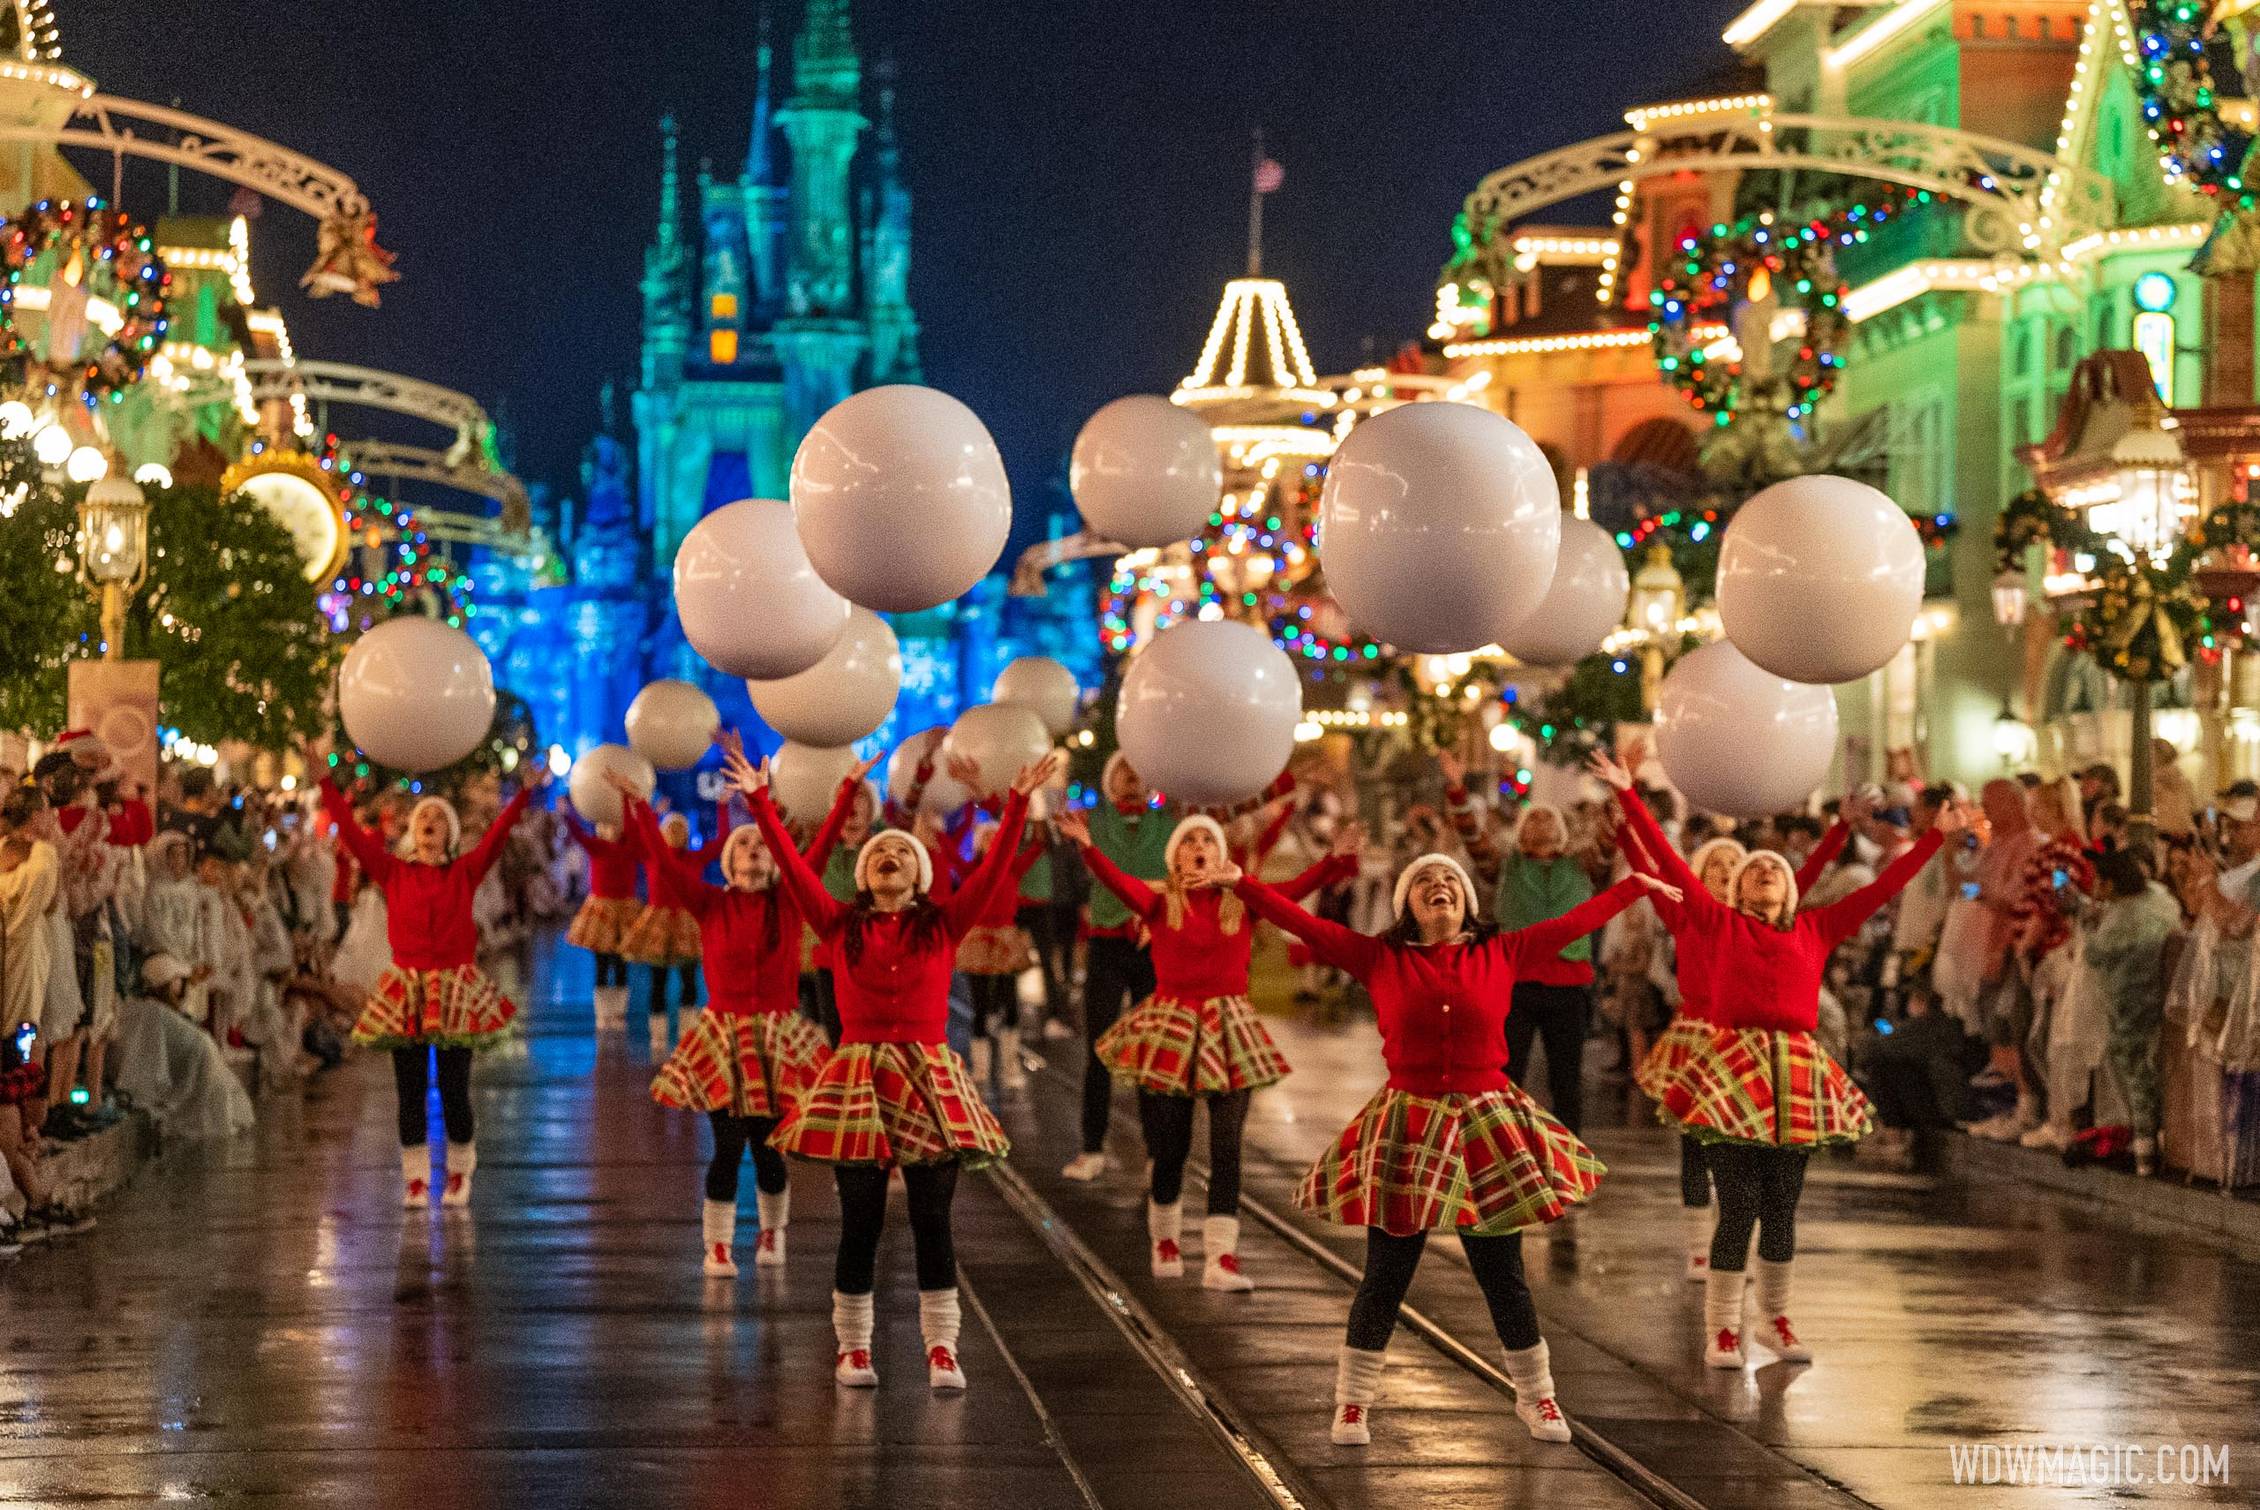 Mickeys-Once-Upon-a-Christmastime-Parade_Full_49250.jpg